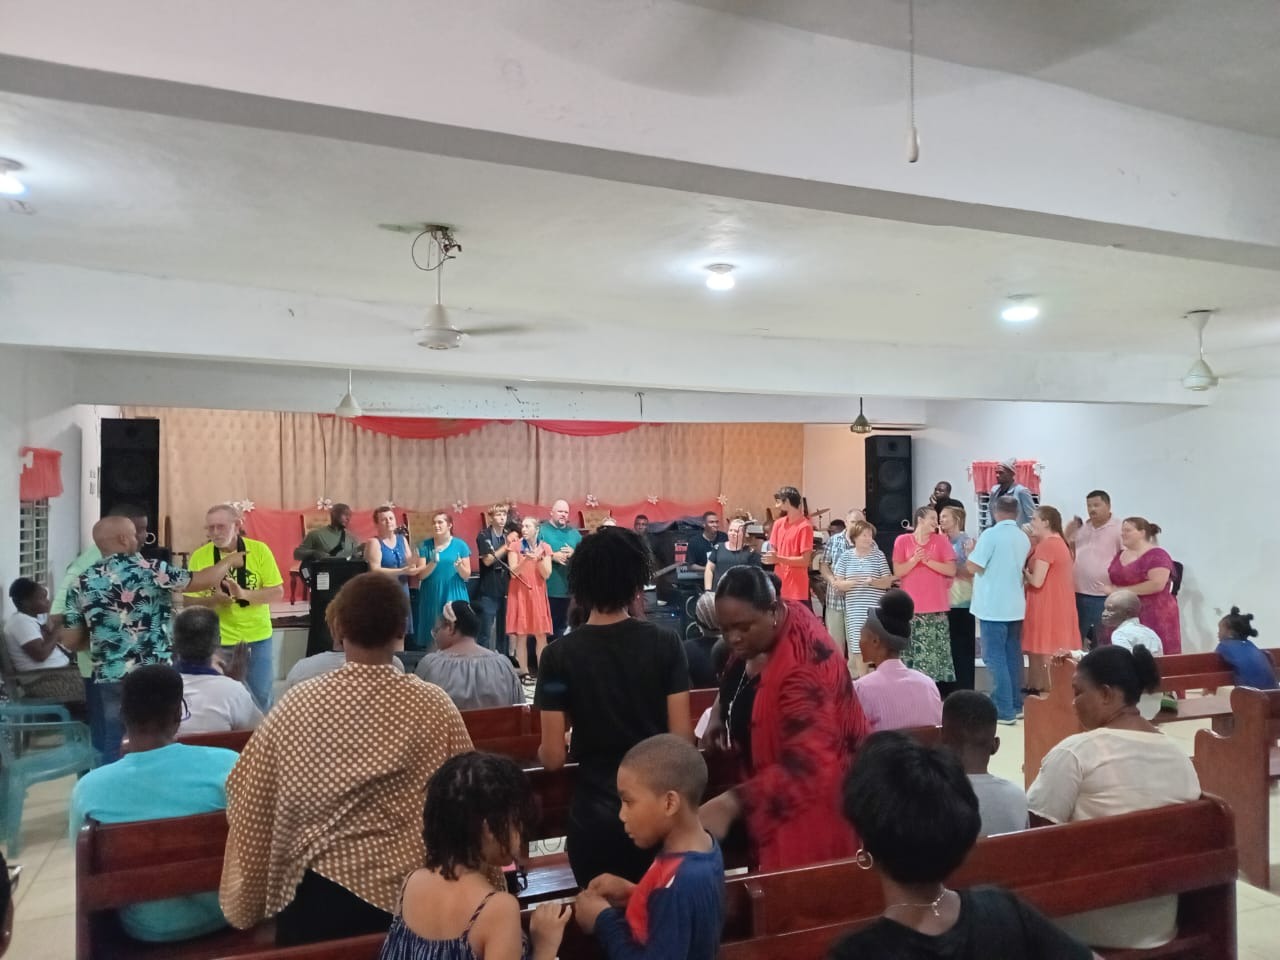 Final Worship Service in the Batey de Palo Bonito Community